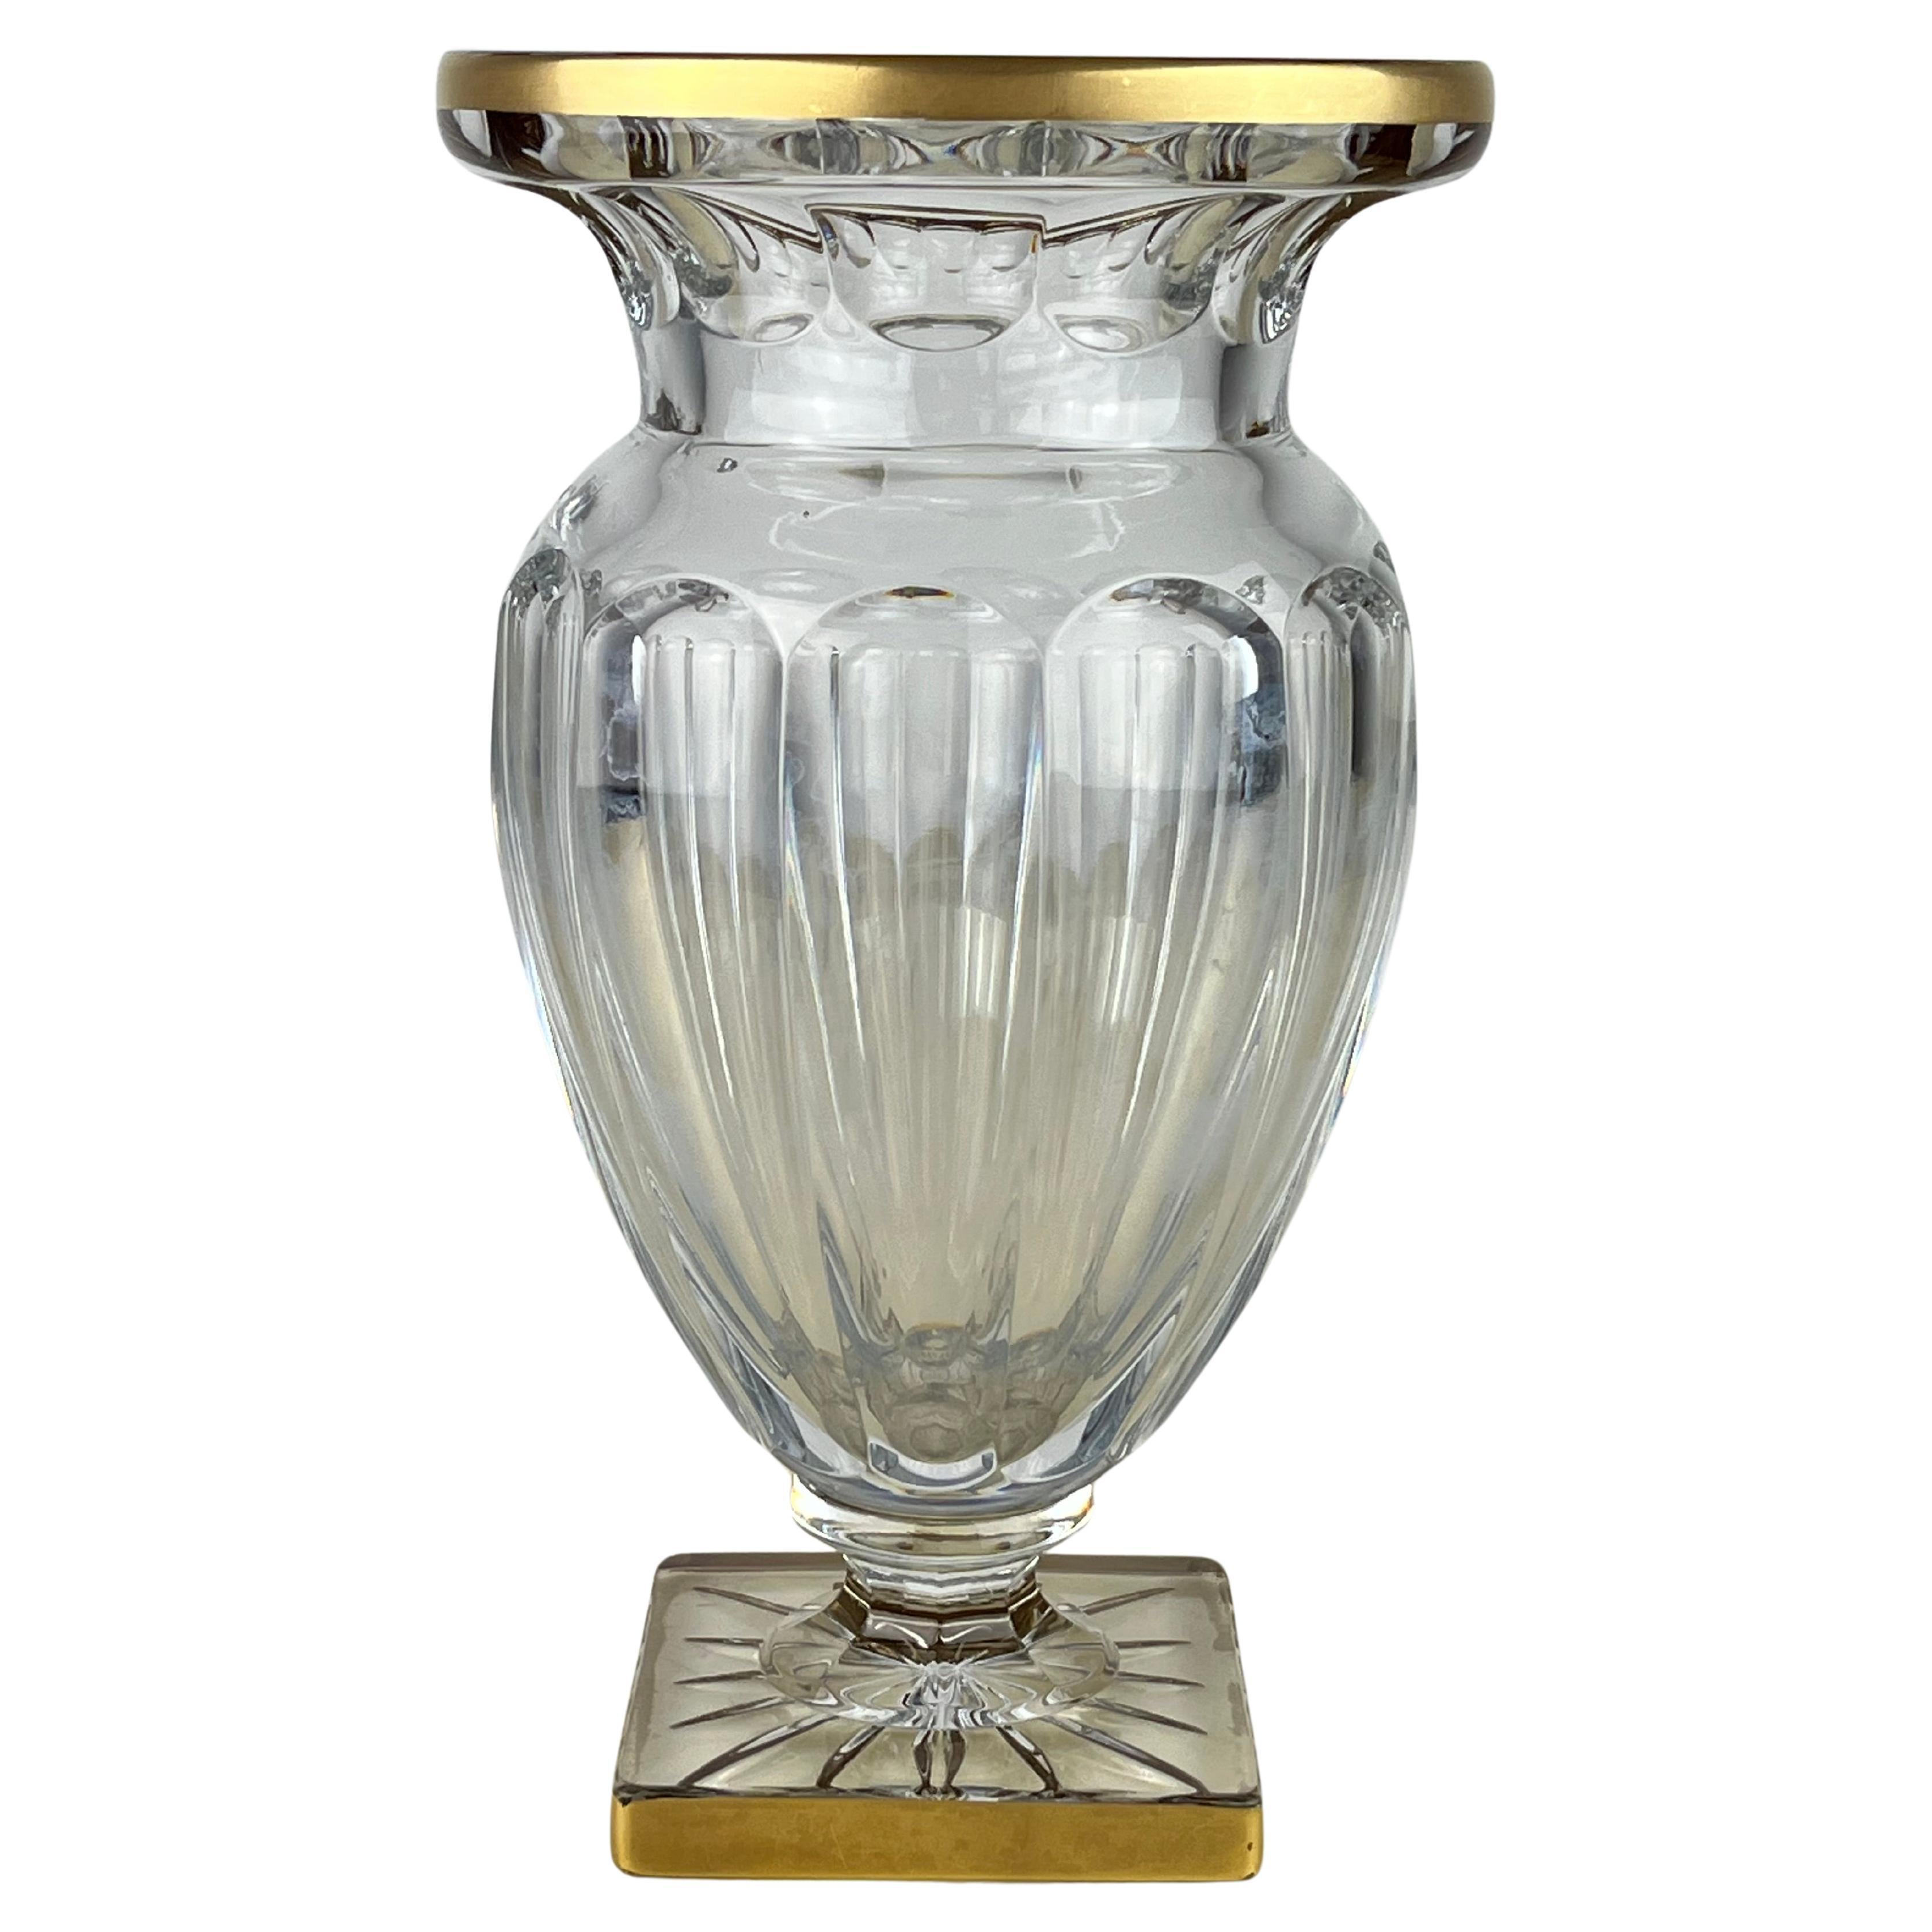 Lead Crystal Vase, France, 1980s